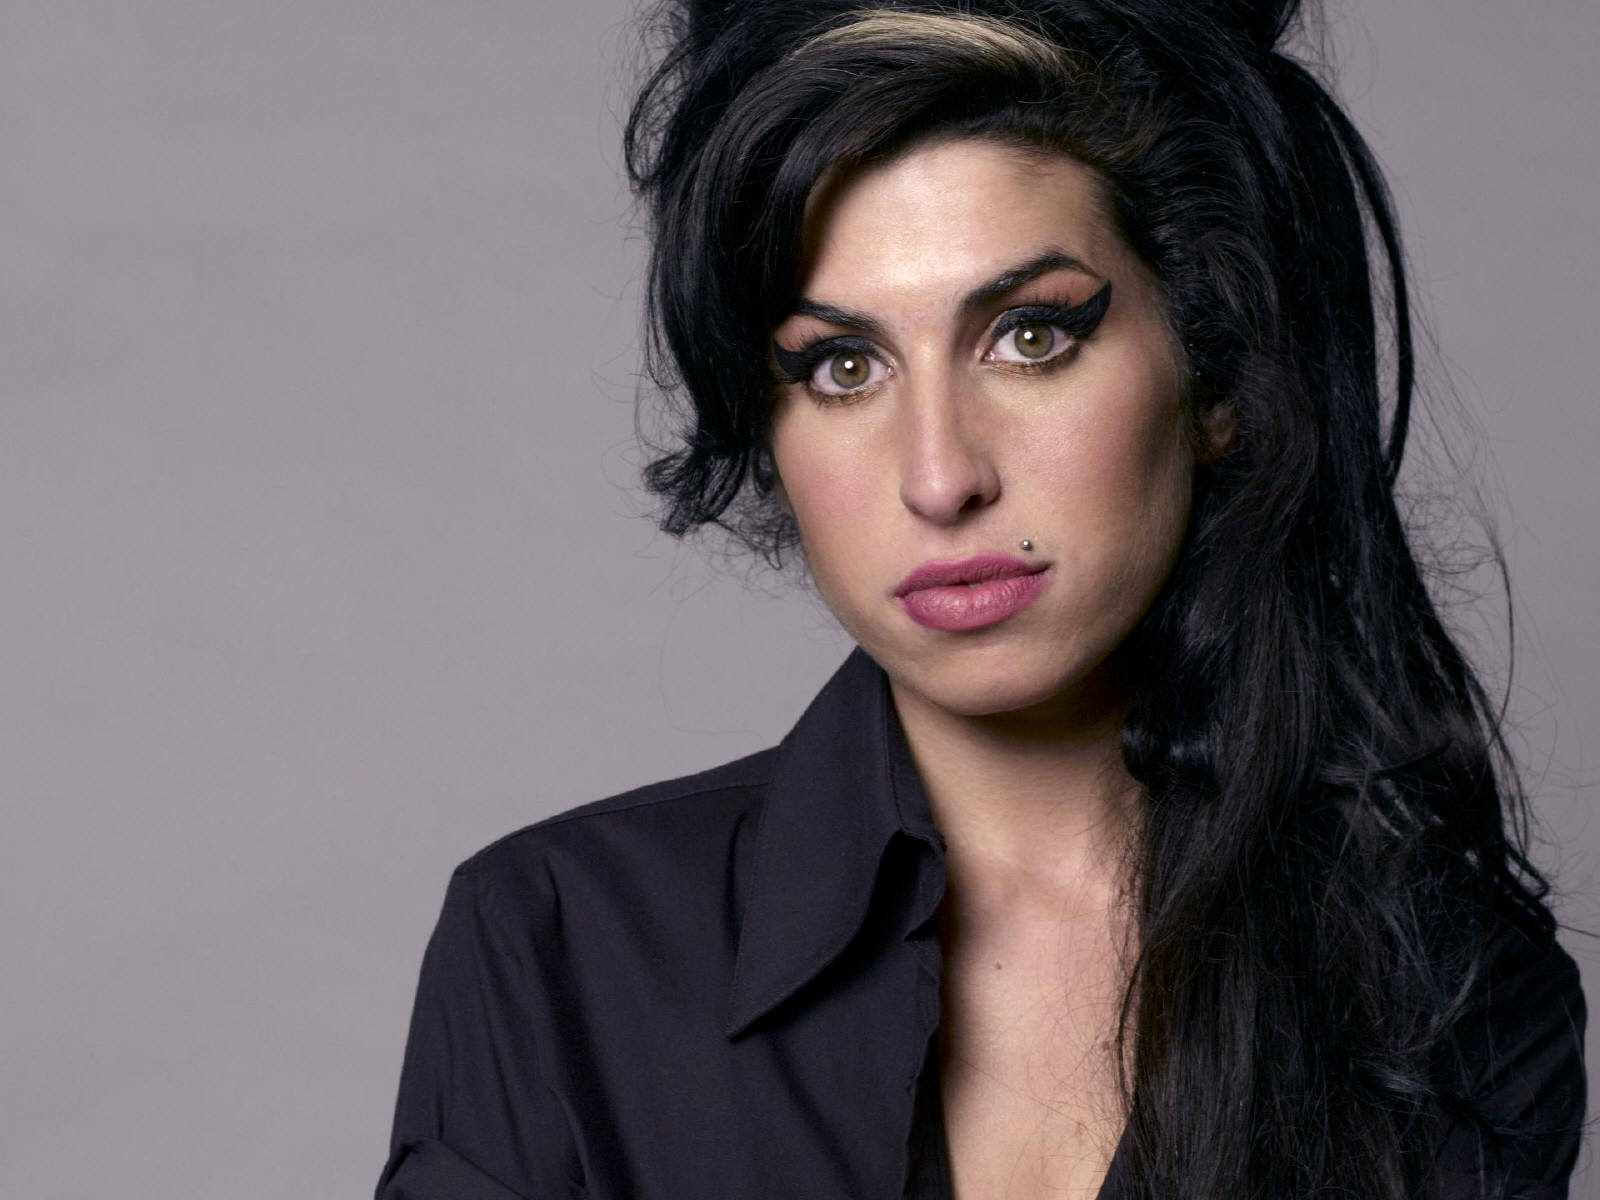 http://2.bp.blogspot.com/-zgL8Mw_2Qnc/T9fT9iHH3wI/AAAAAAAABes/_tlTMue81xc/s1600/Amy+Winehouse.jpg